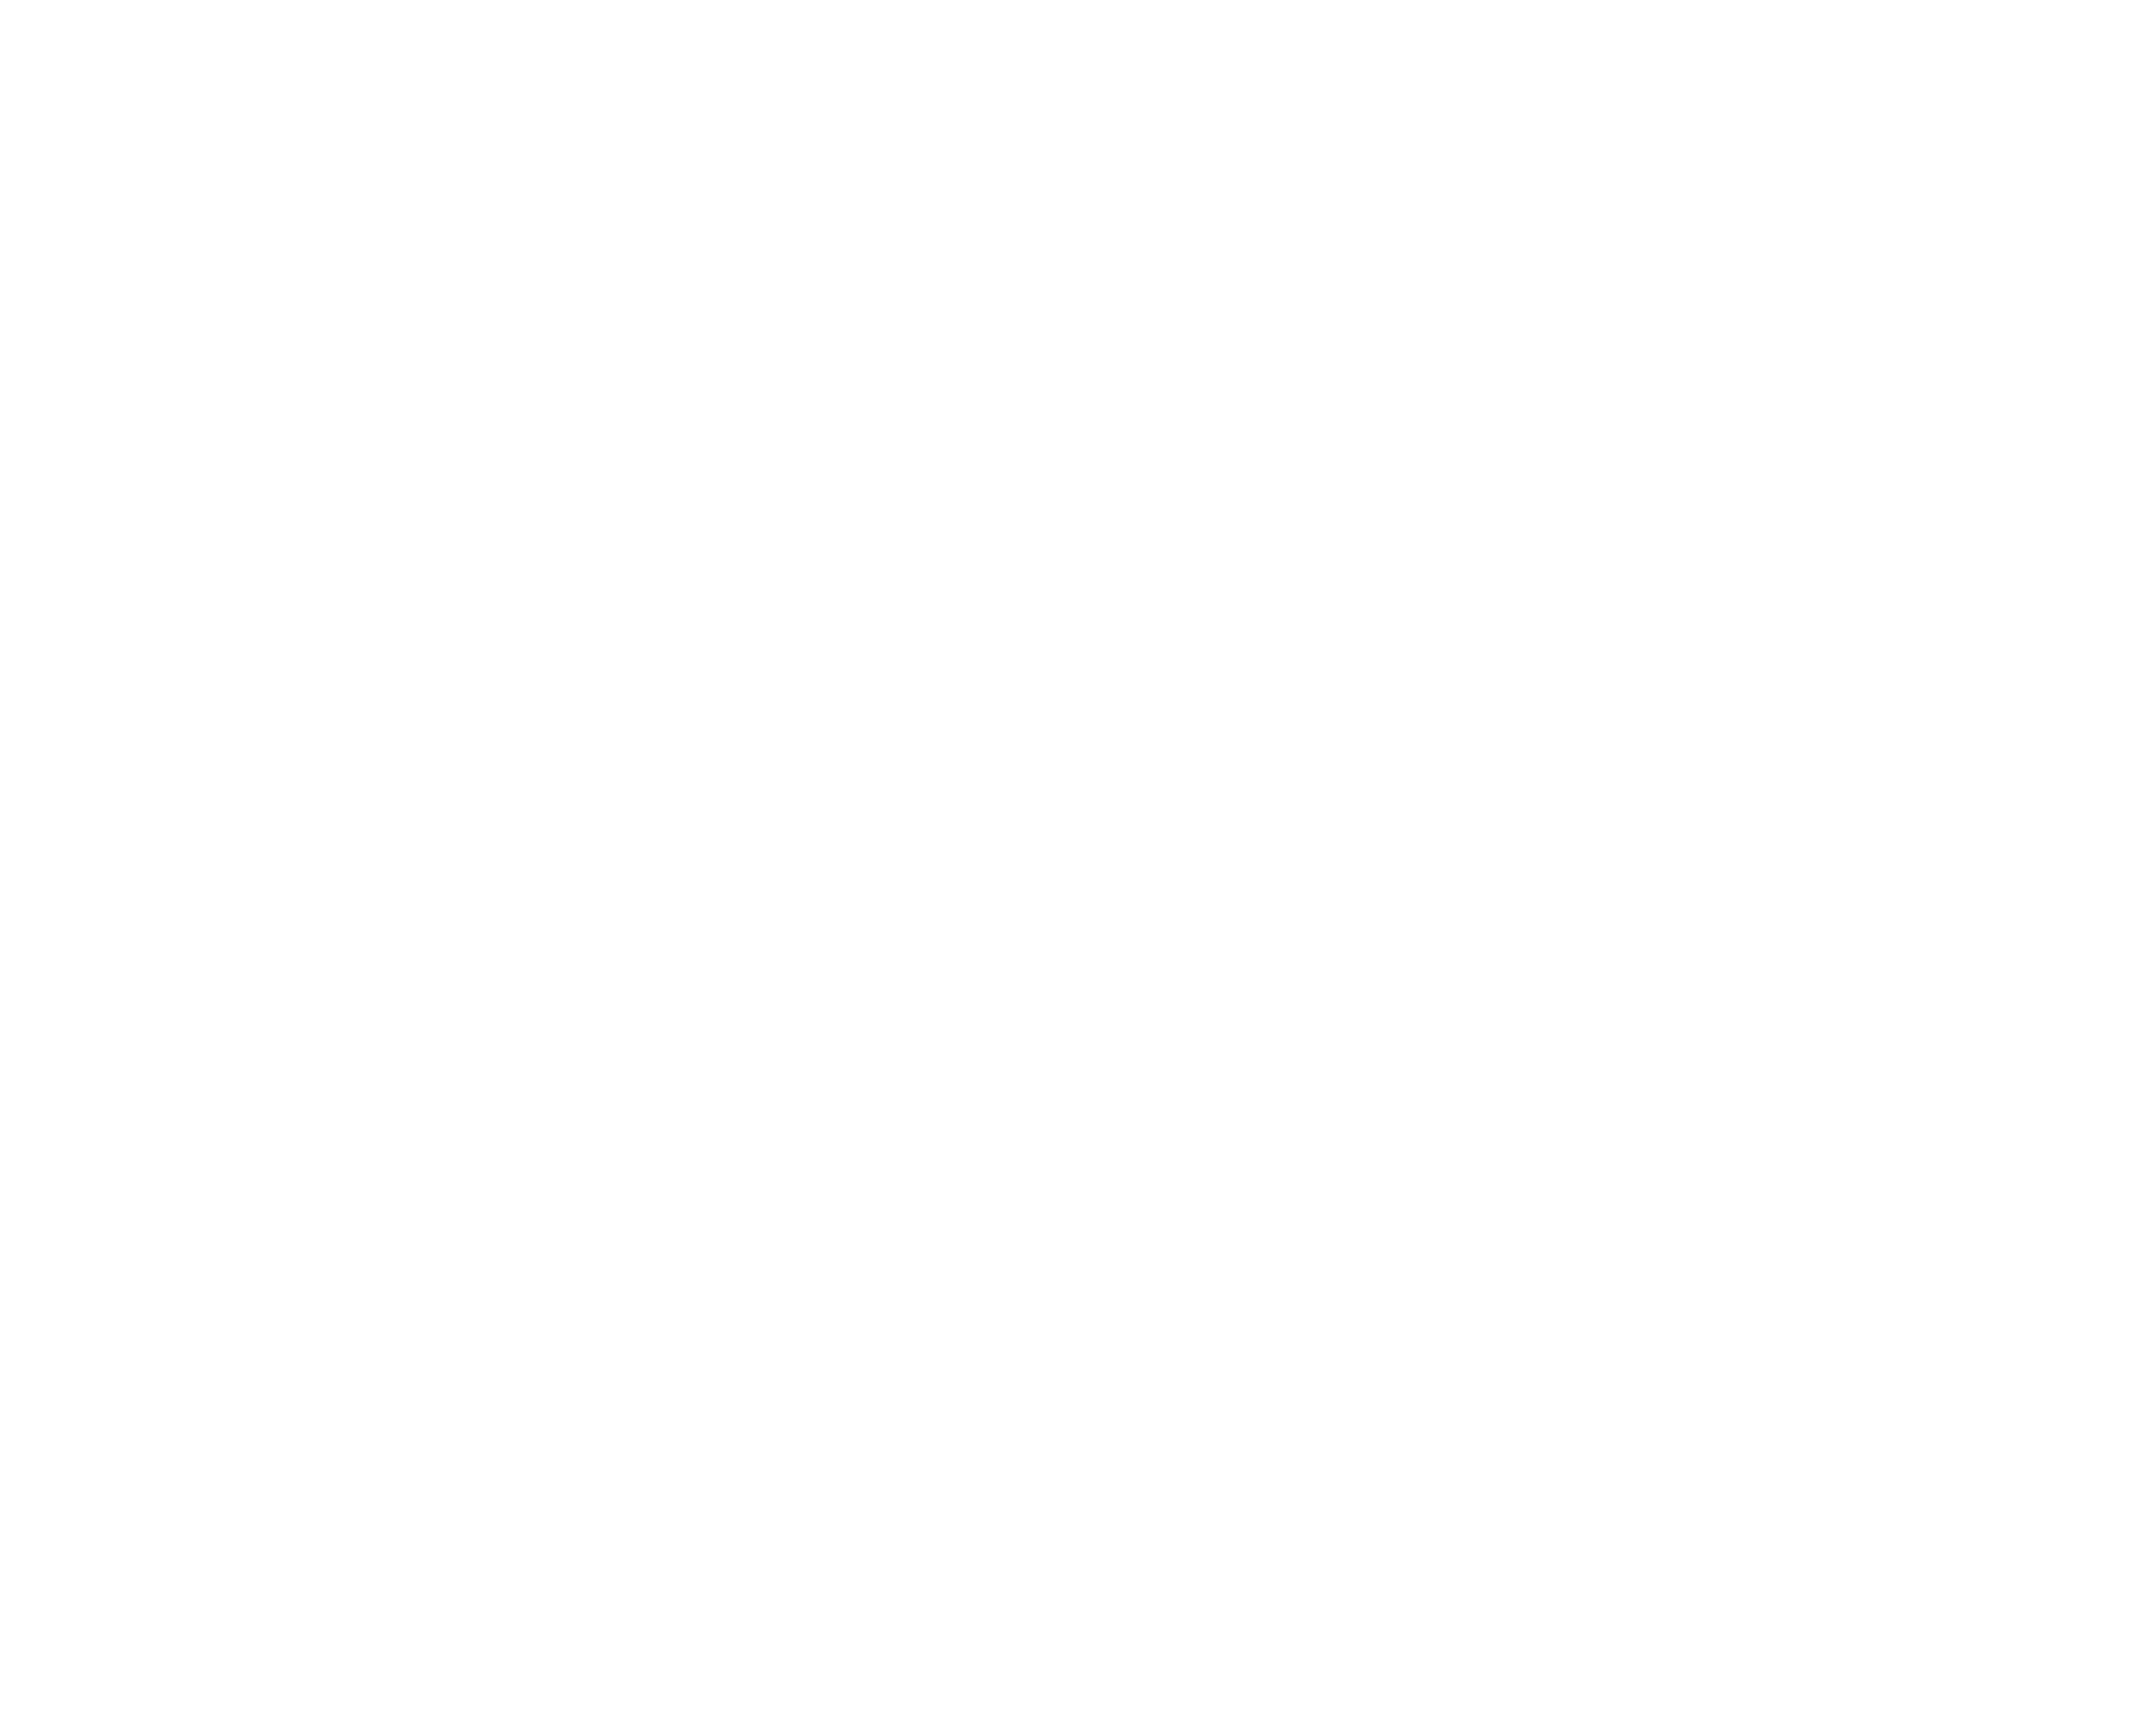 Lockstart emergency unlock and start devices for Nissan